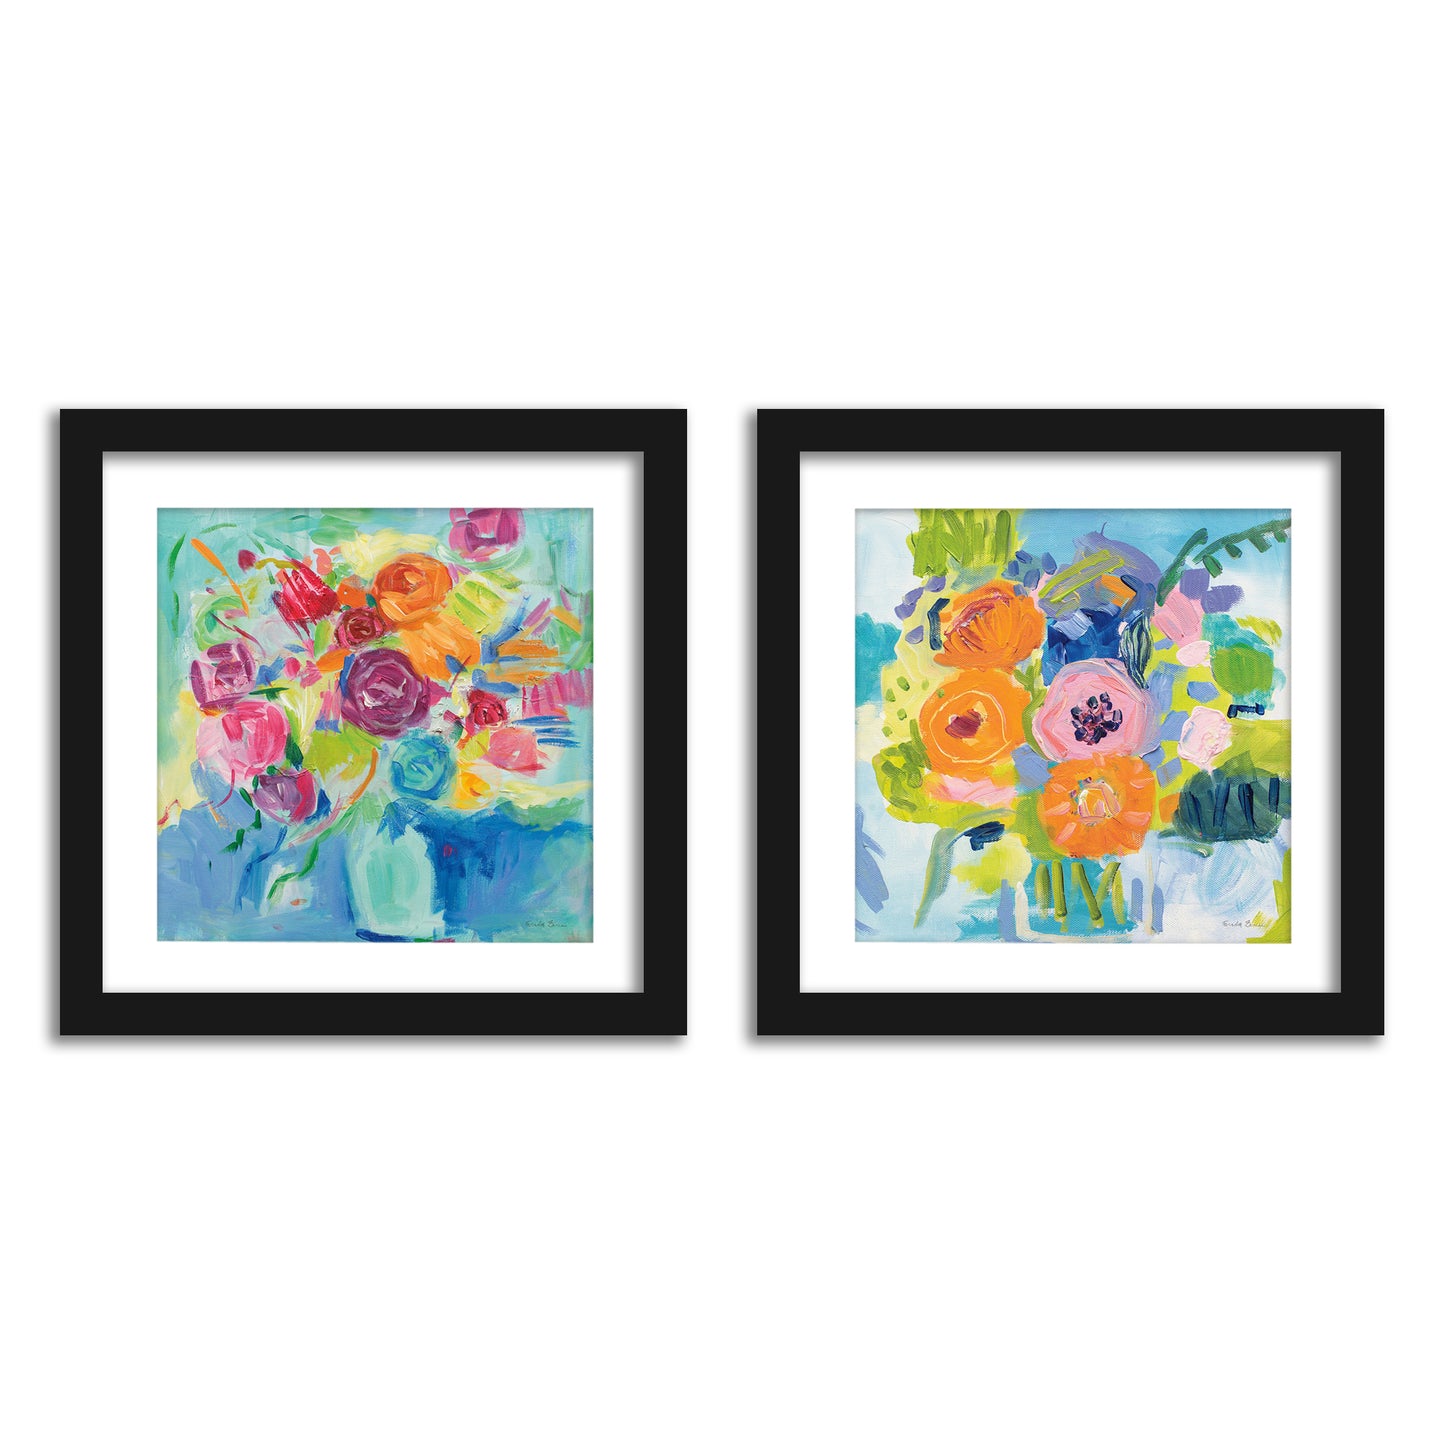  Summer Bouquets Bathroom Wall Art - Set of 2 Framed Prints by Wild Apple